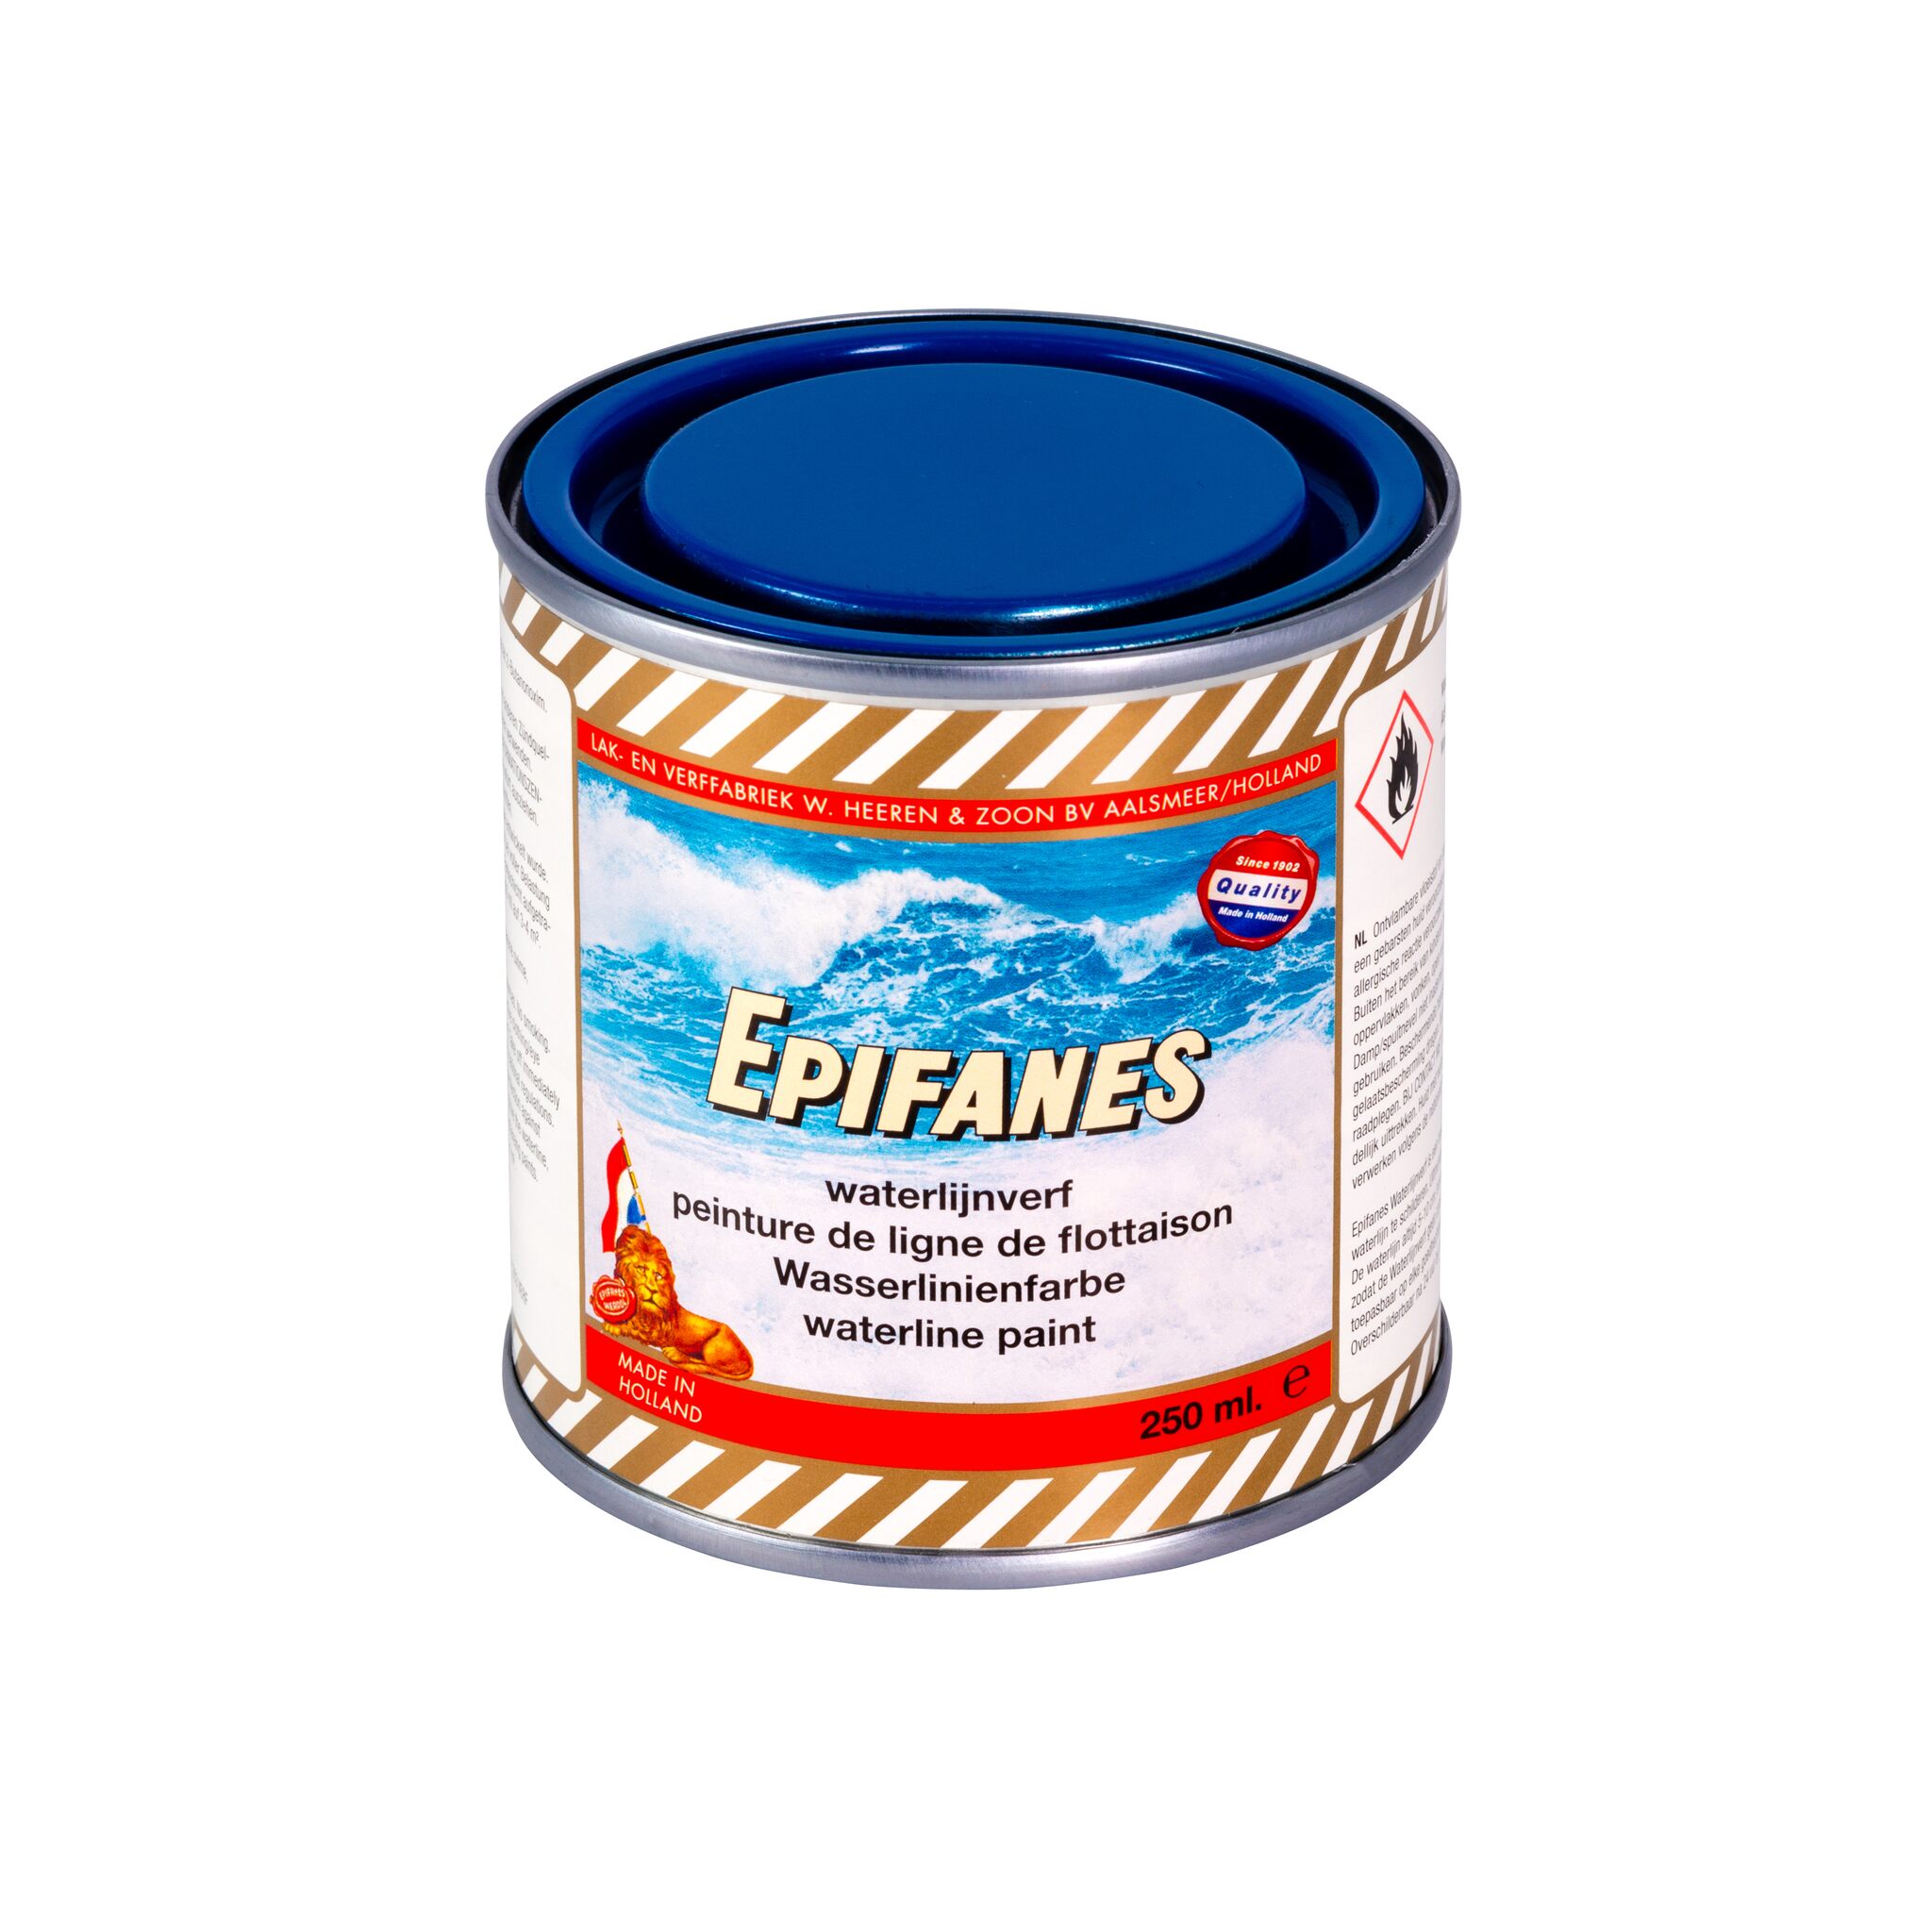 EPIFANES waterline paint